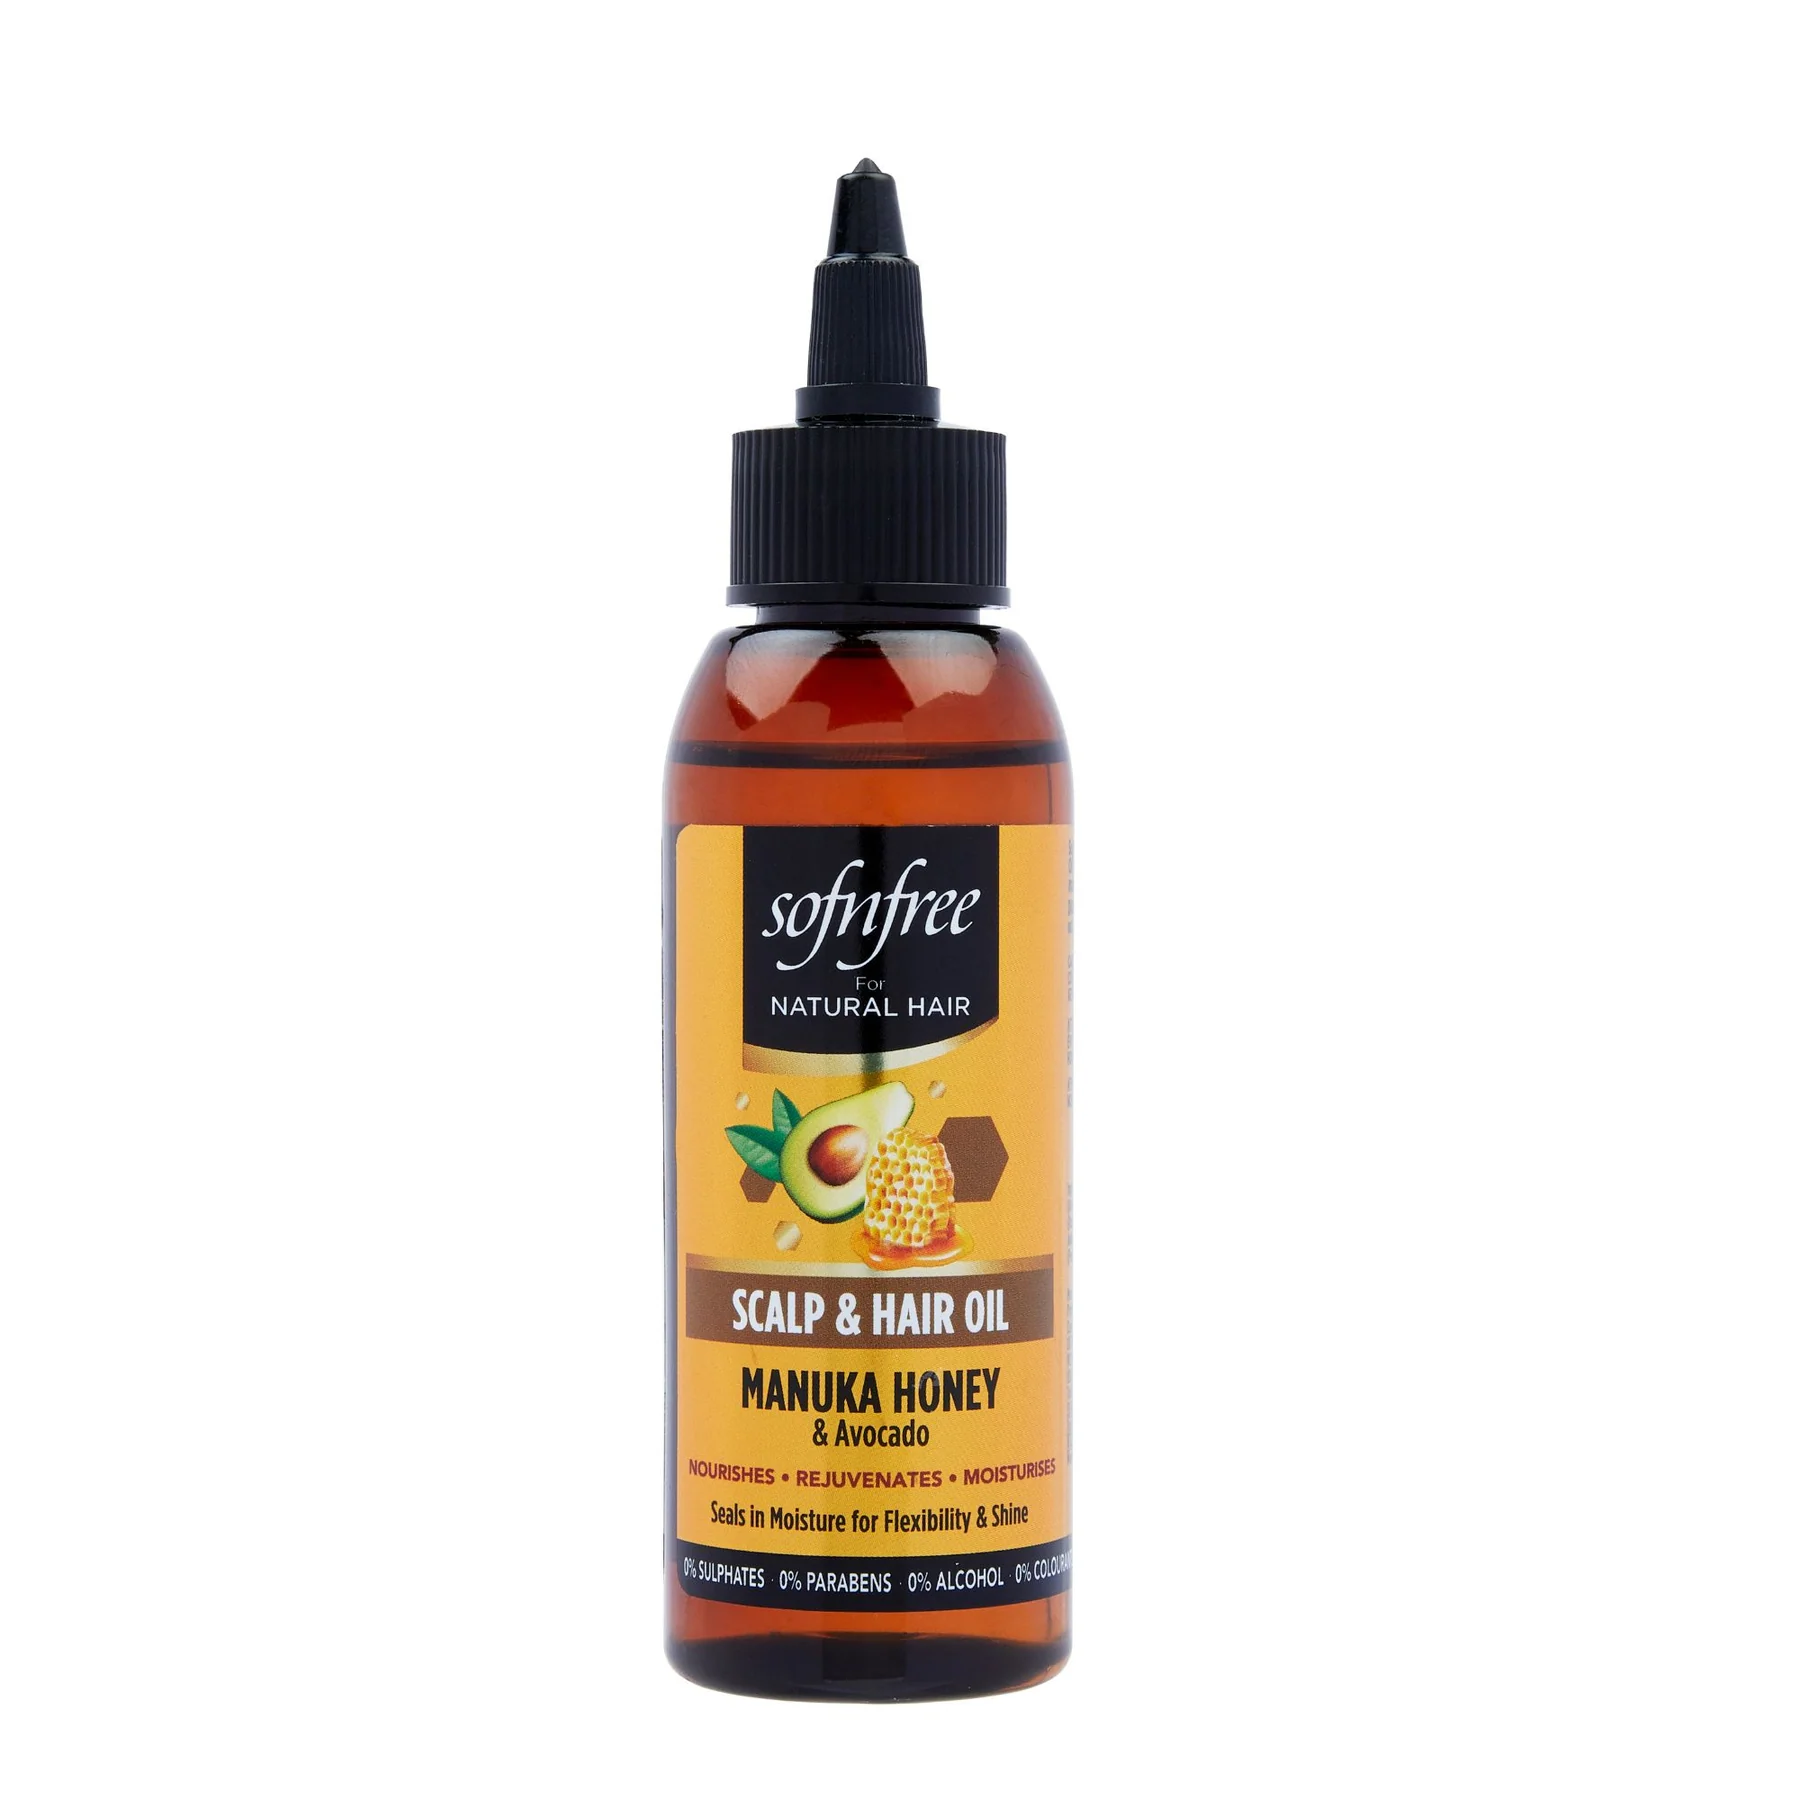 SofnFree for Natural Hair Manuka Honey & Avocado Scalp & Hair Oil 4oz